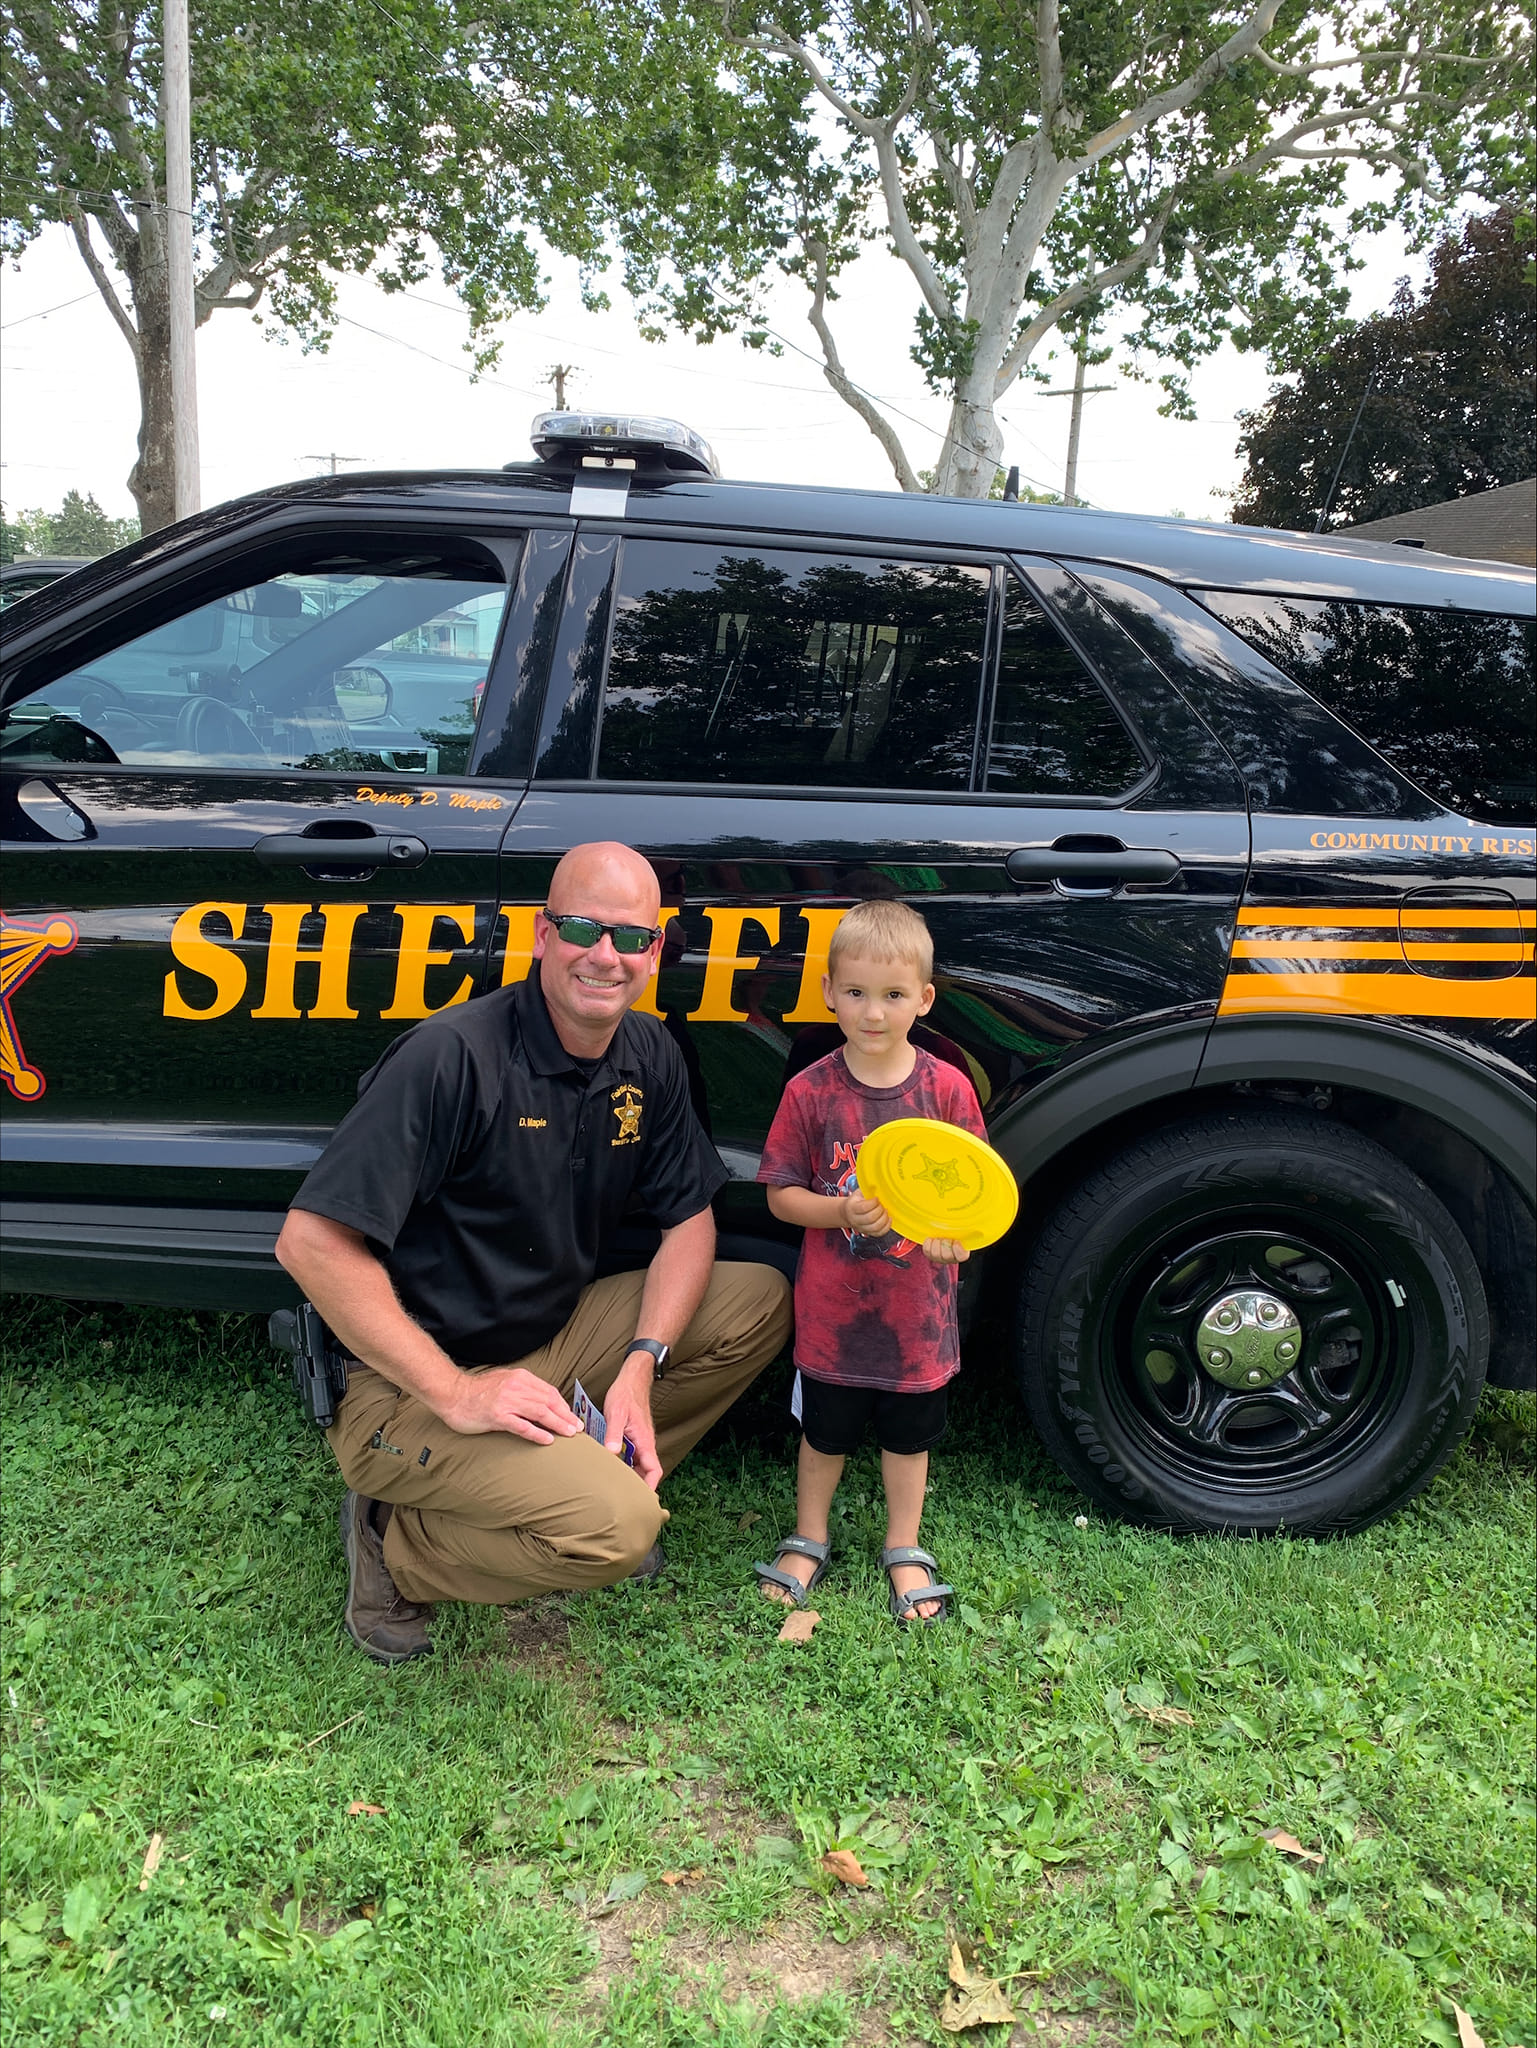 sheriff and child